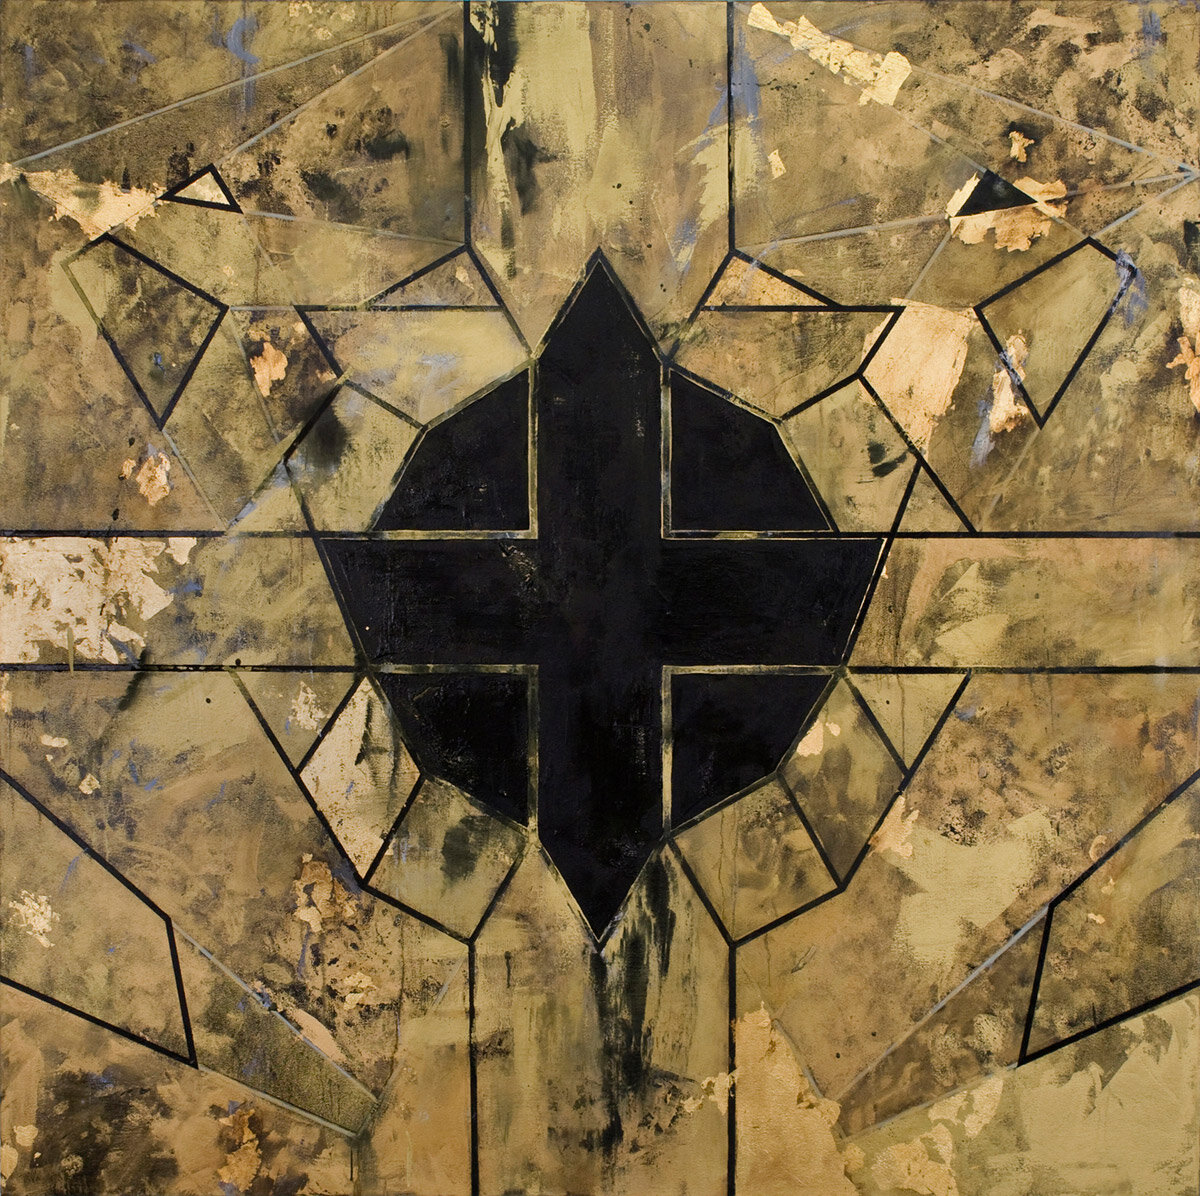    RihtA Es¬mpøln (mega)    Oil, acrylic, and gold leaf on canvas  60” x 60”   